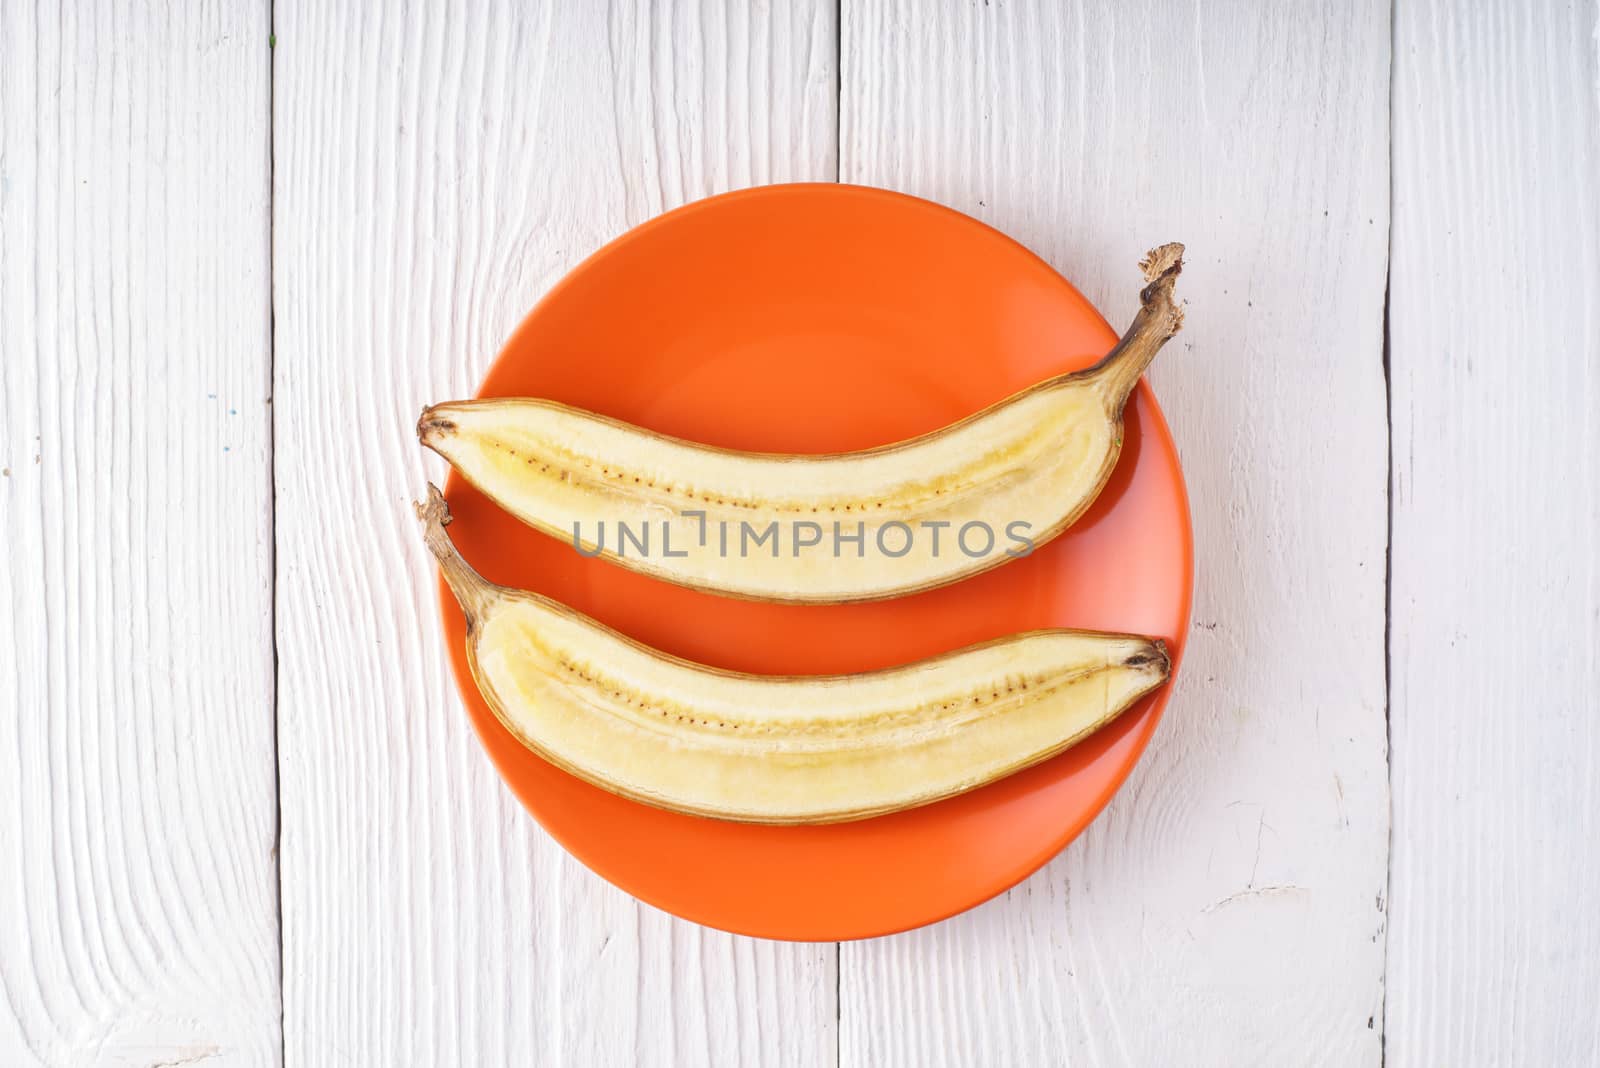 Banana halves lie on orange plate by Deniskarpenkov